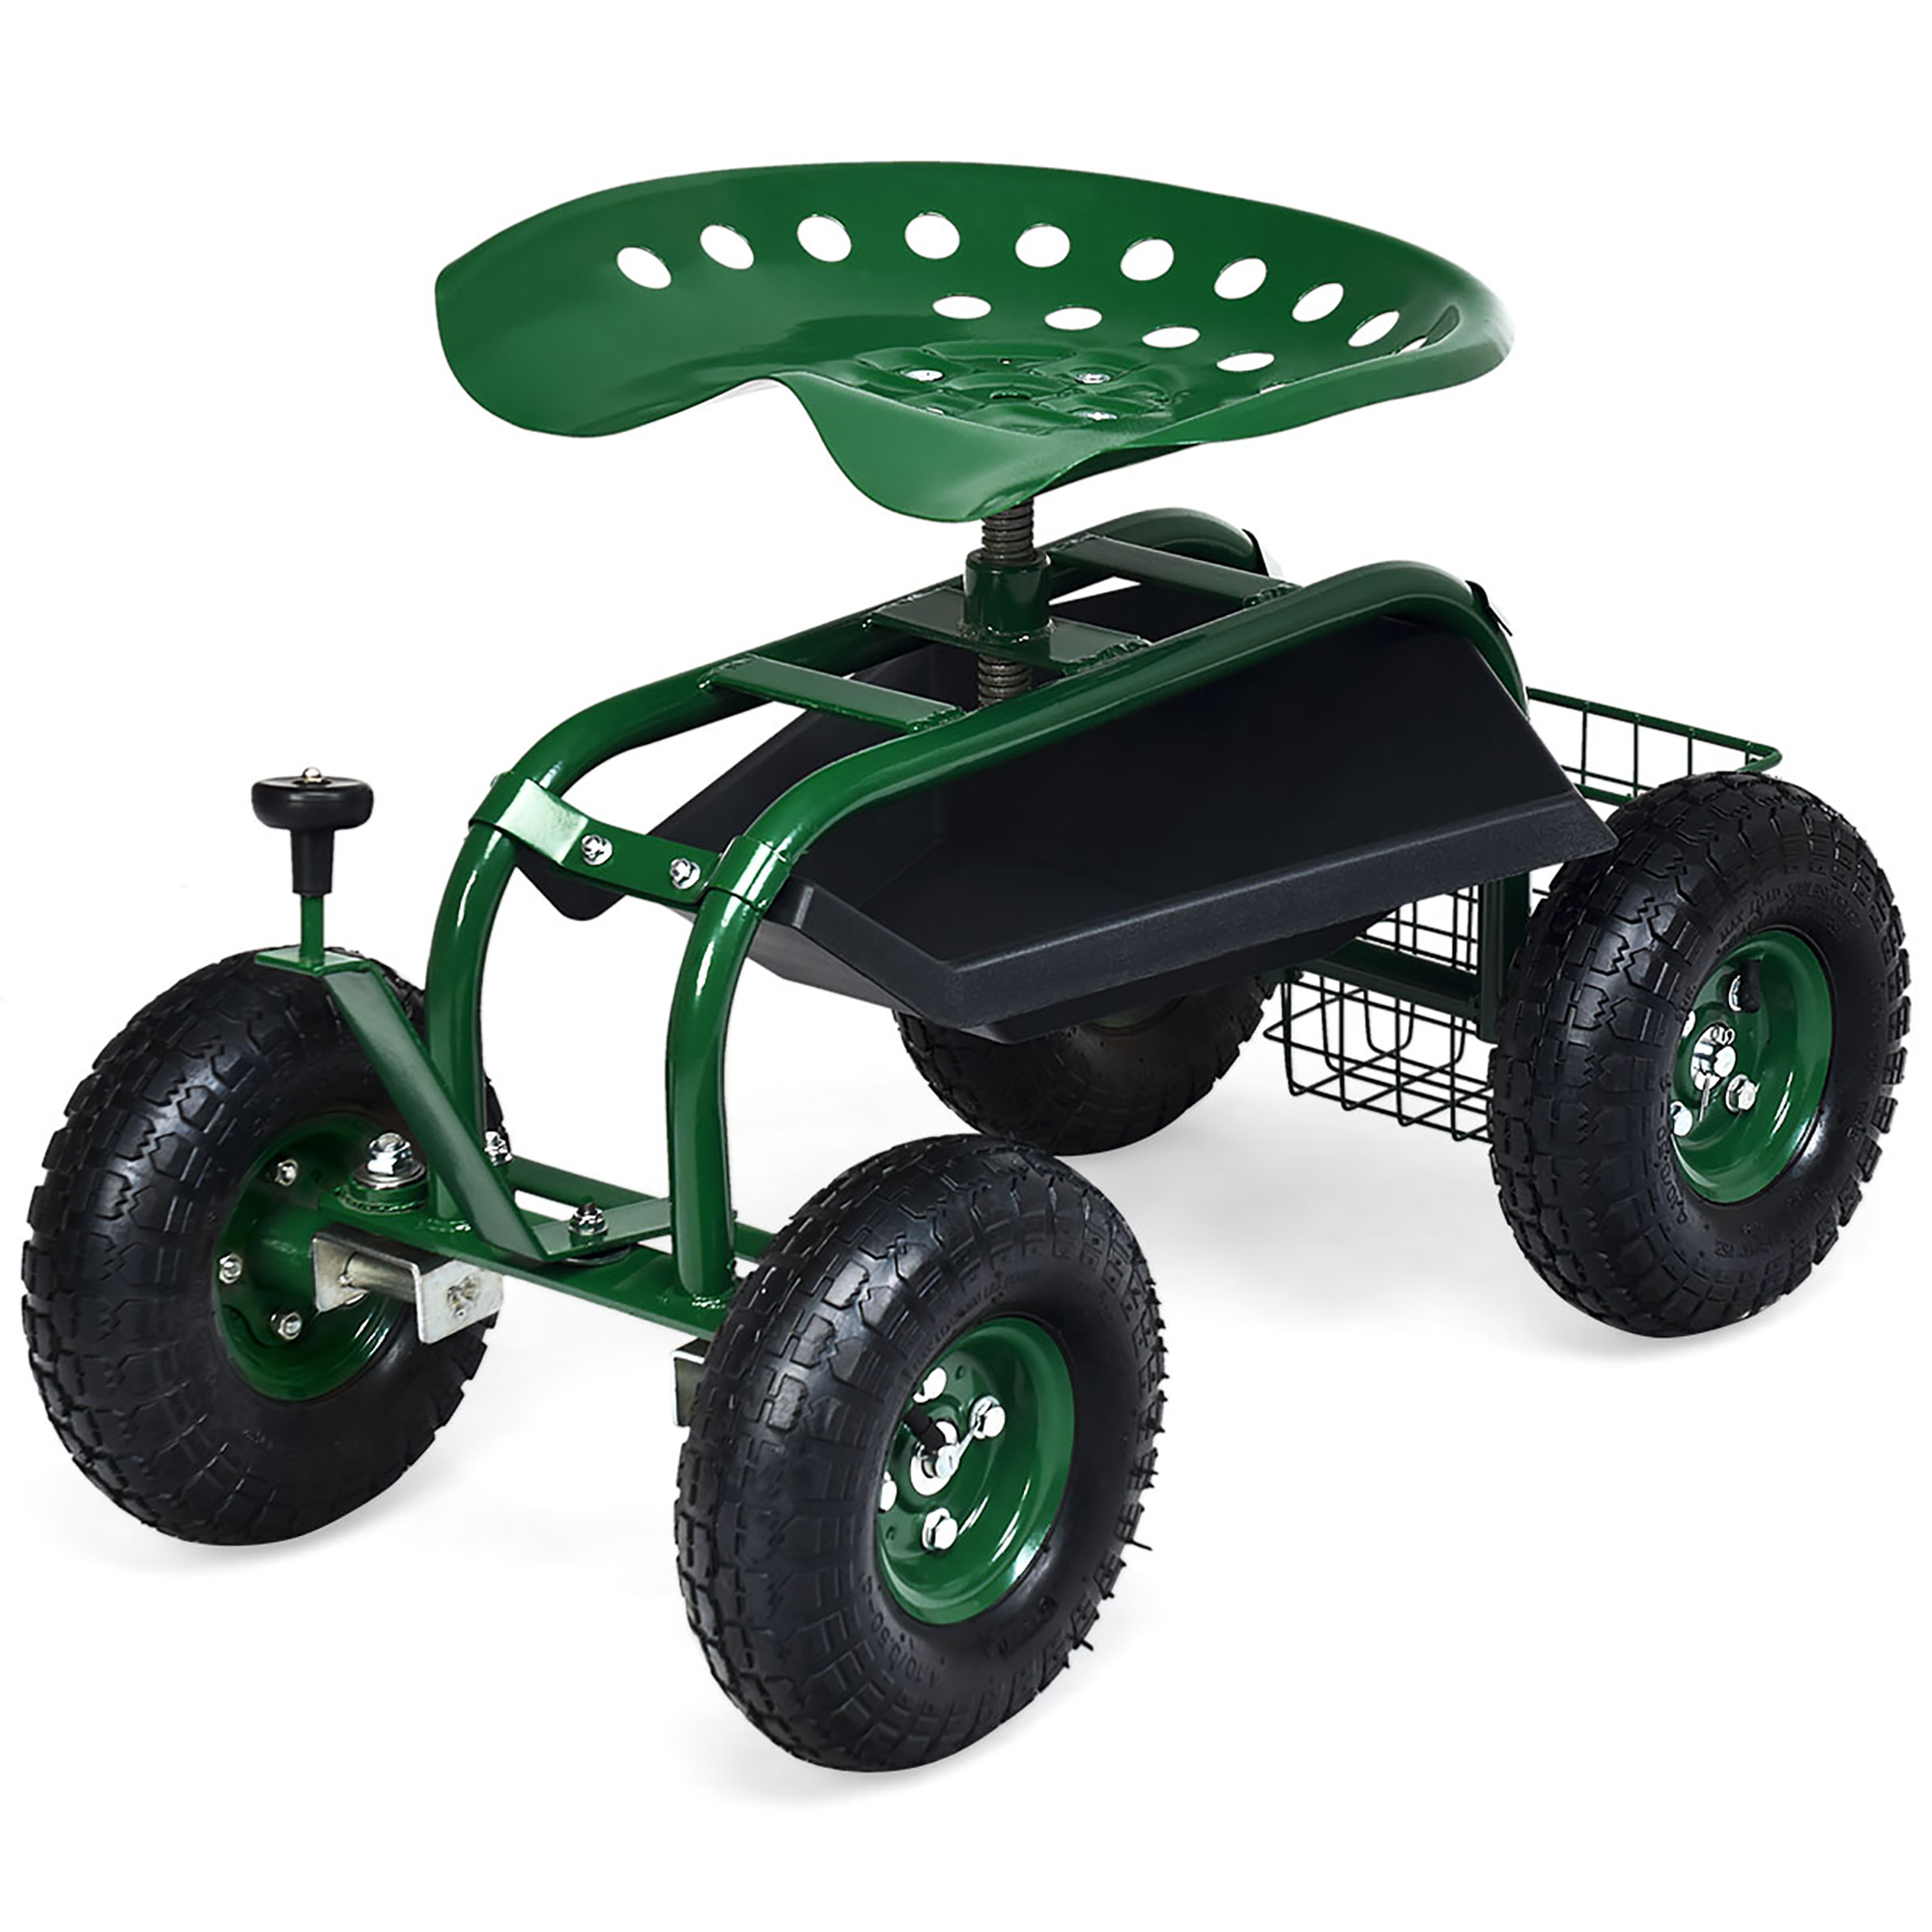 Costway Garden Cart Rolling Work Seat w/ Tool Tray Basket Green